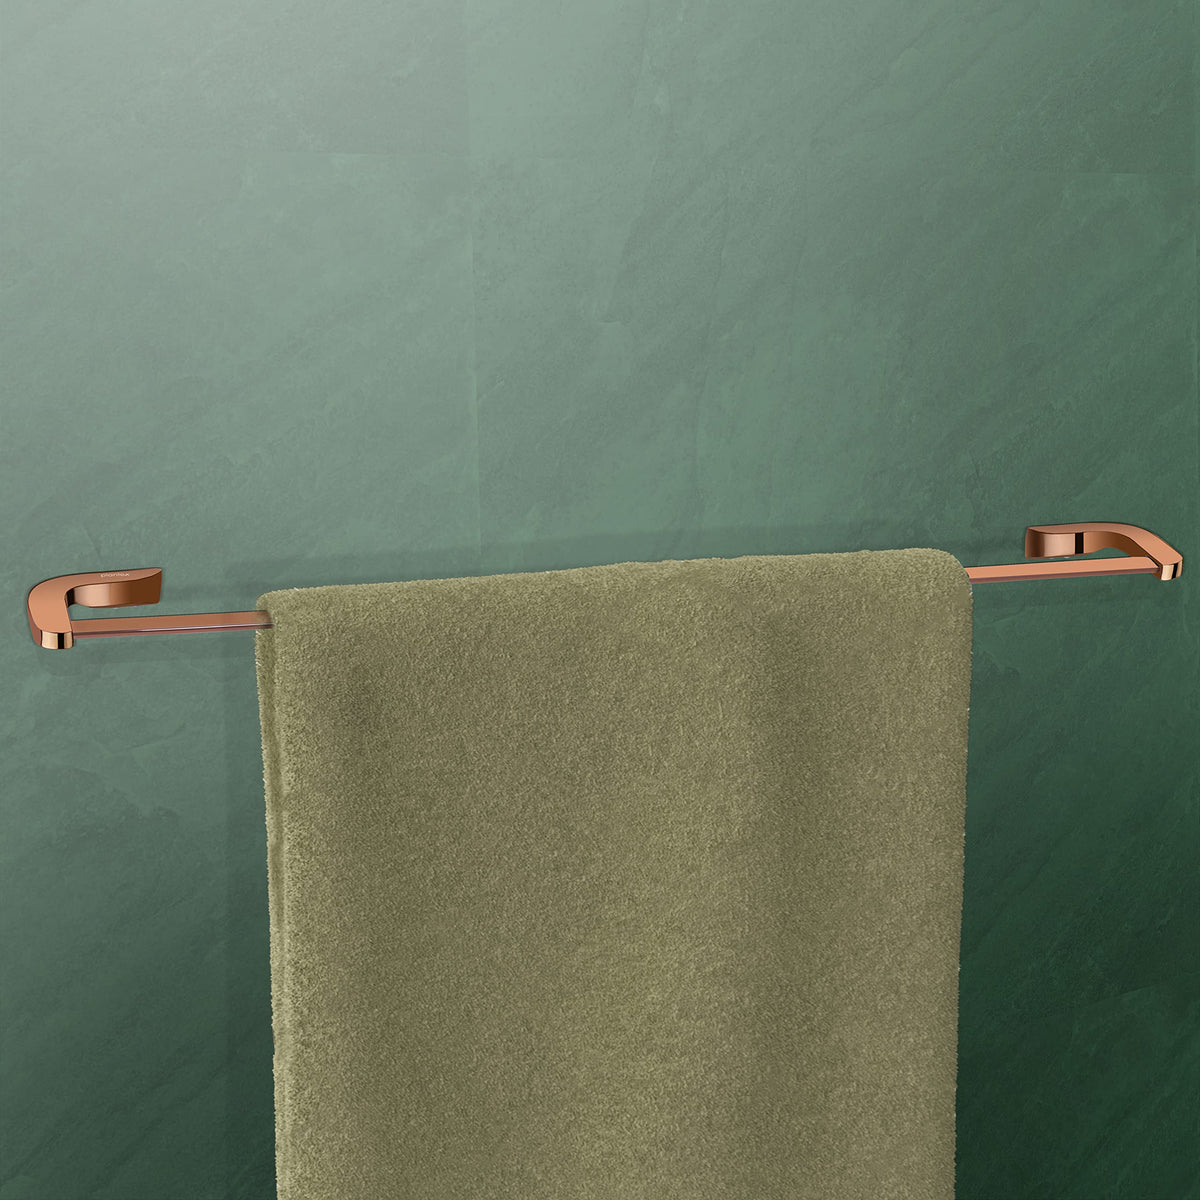 Plantex Smero Pure Brass Towel Hanger for Bathroom/Stand/Towel Bar/Bathroom Accessories - Smart (24 Inch-PVD Rose Gold)